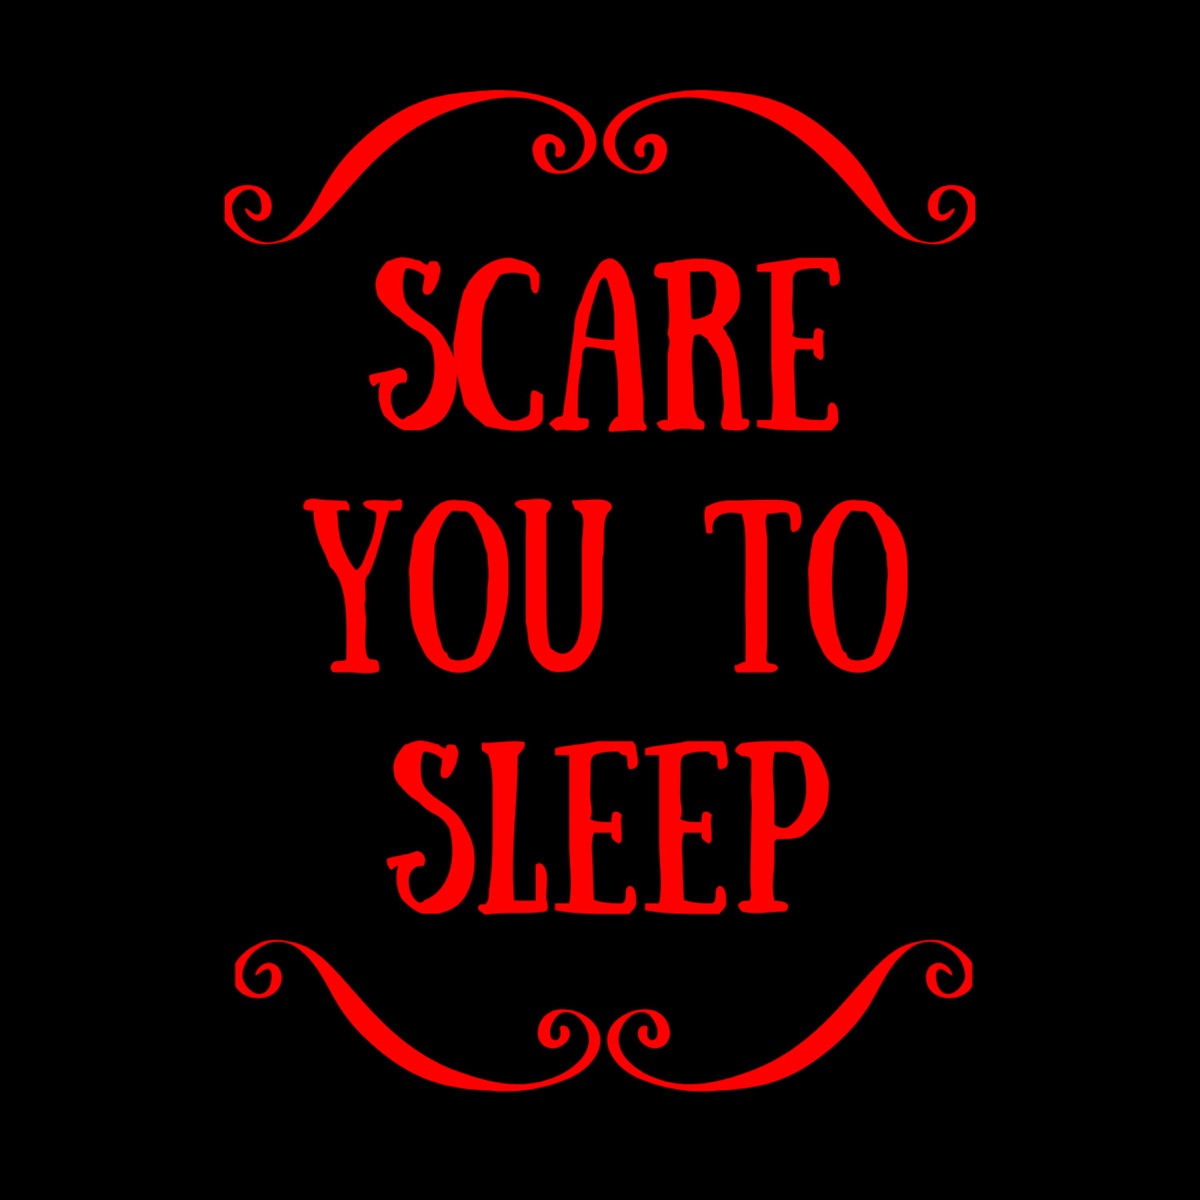 Welcome to the nightmare — Go to sleep. - Jeff the killer.